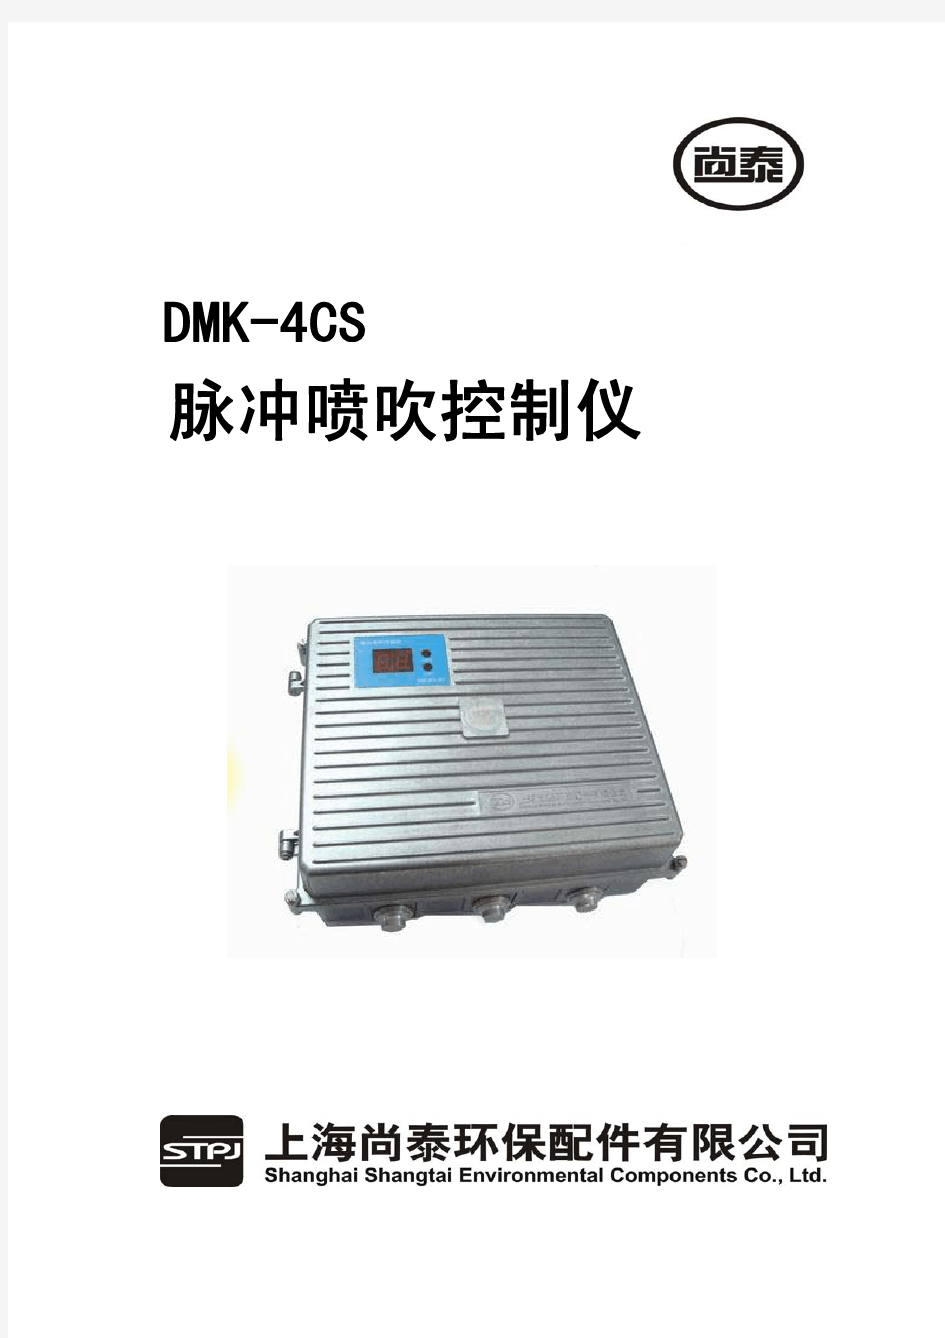 DMK-4CS脉冲喷吹控制仪